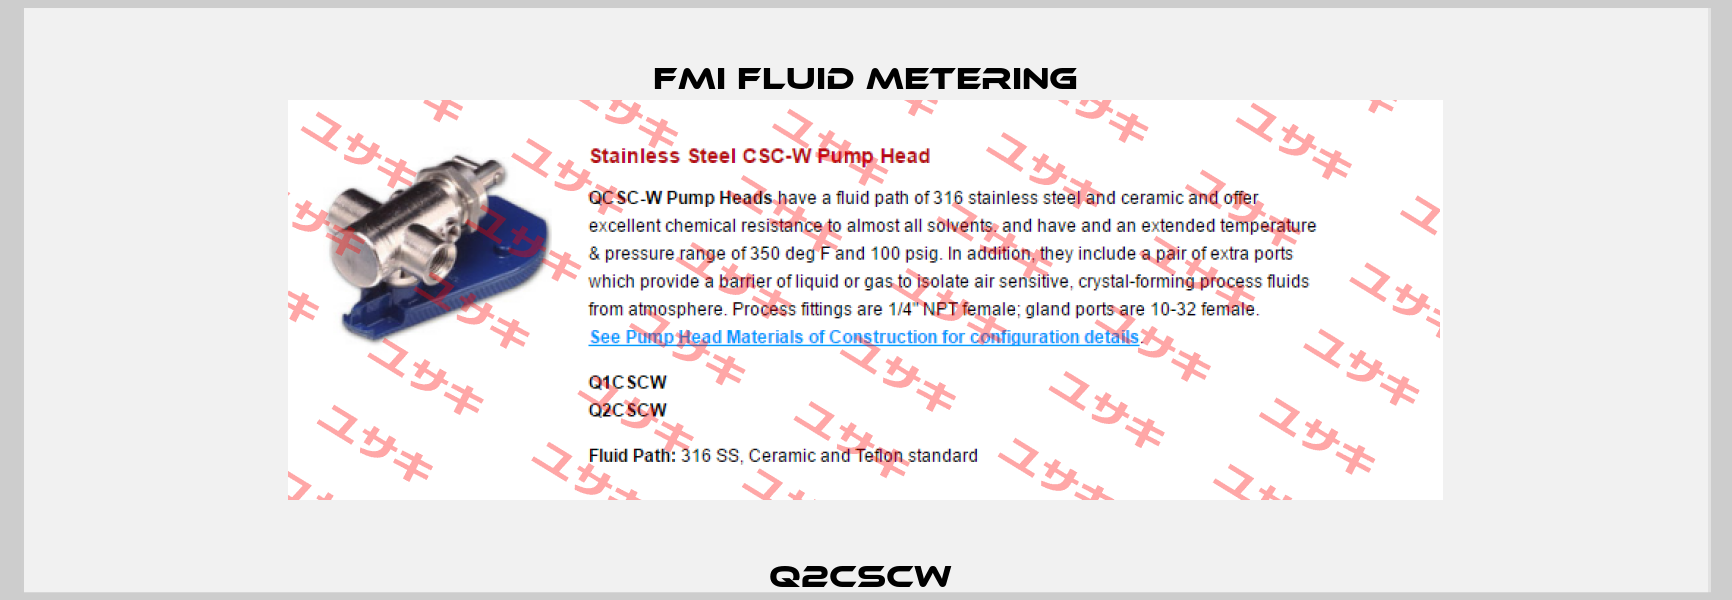 Q2CSCW  FMI Fluid Metering